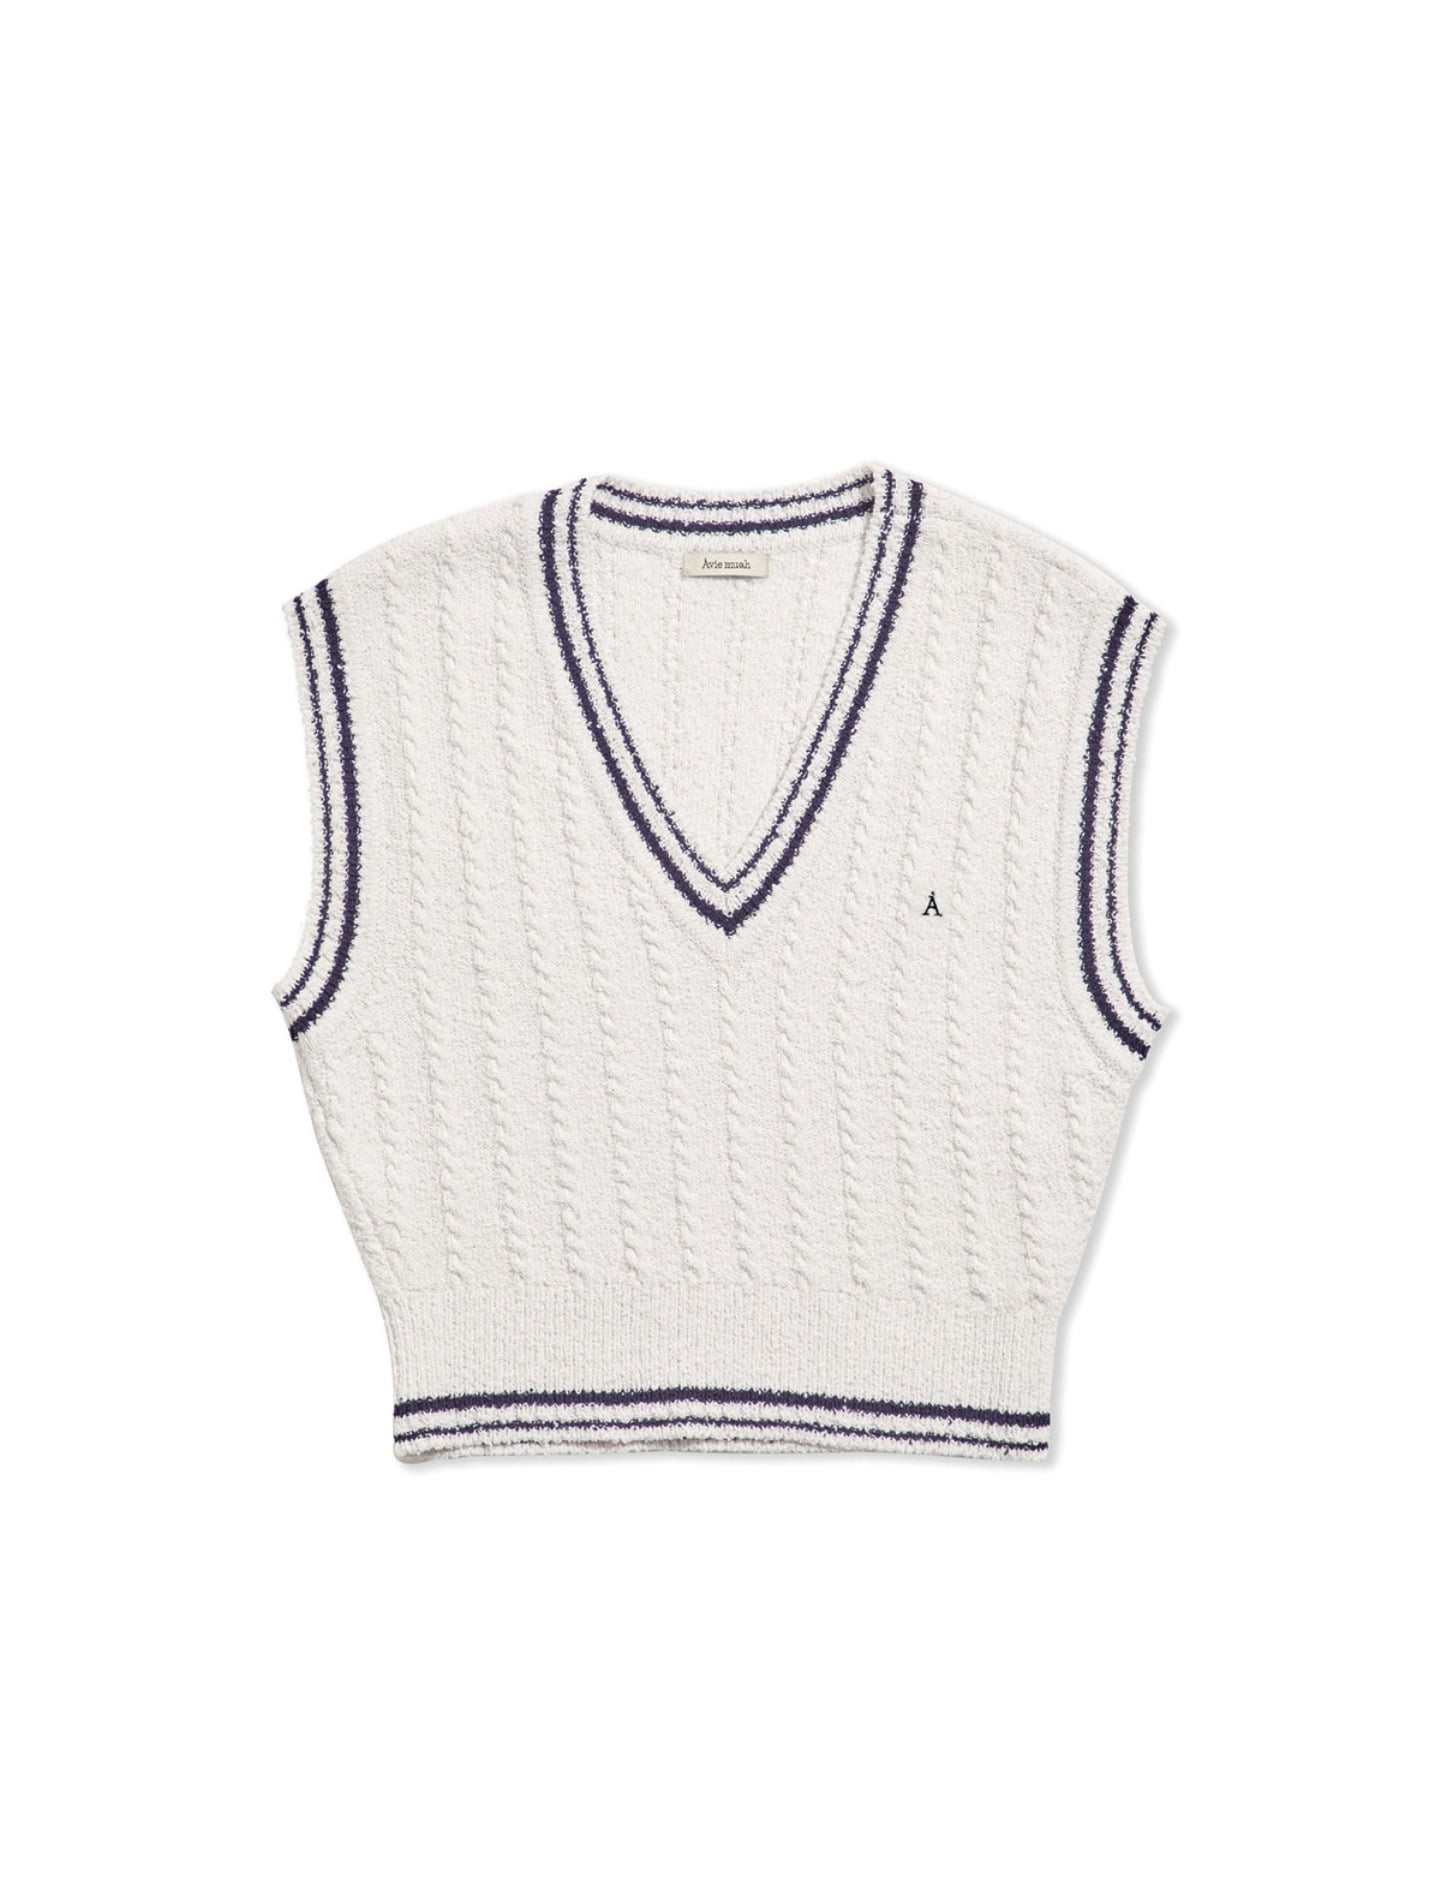 À Logo Cotton Sweater Vest (White)